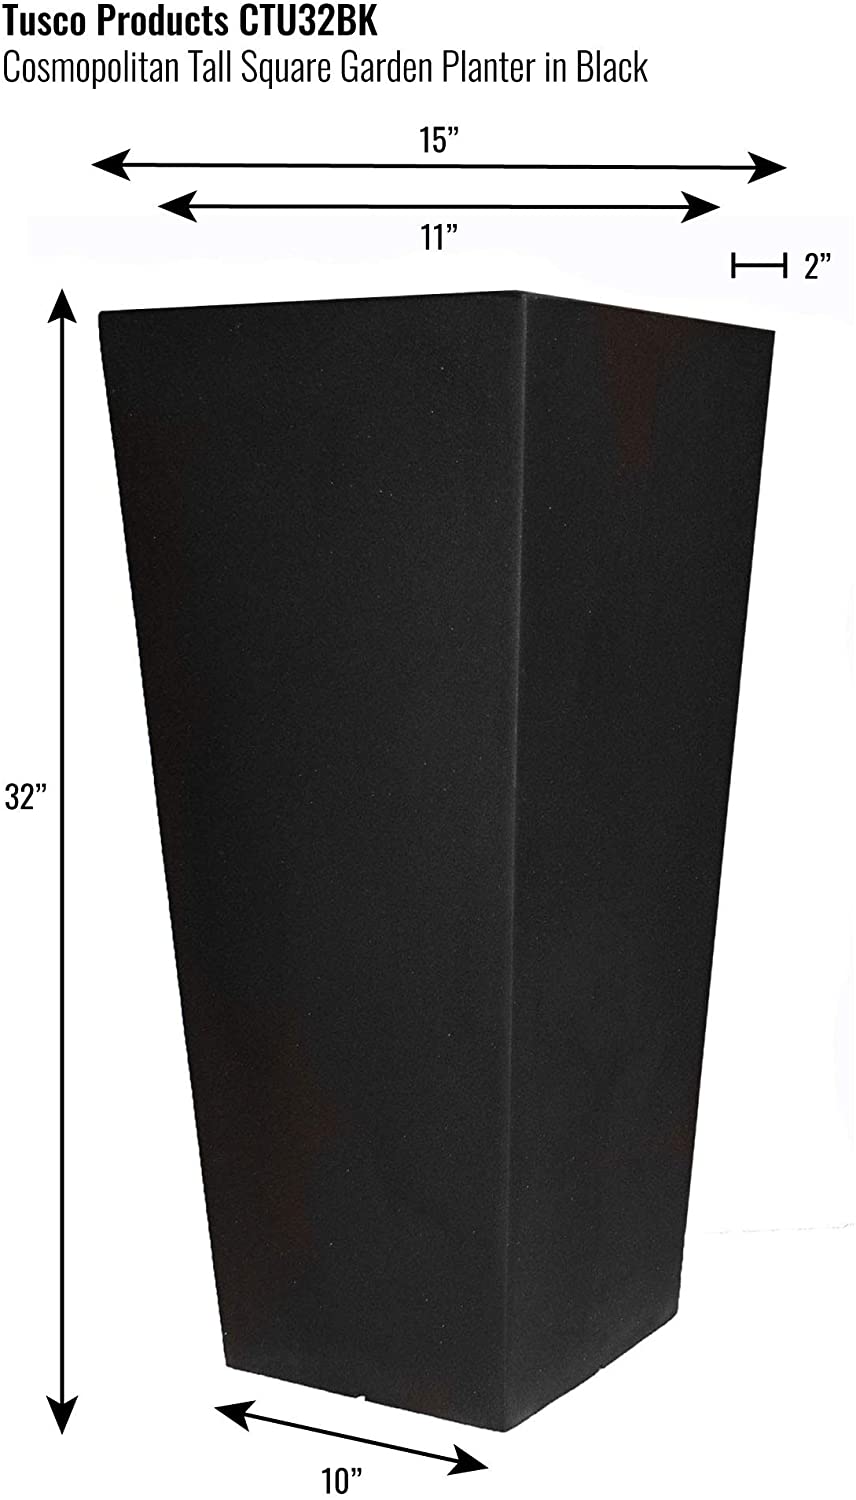 Tusco Products (#CTU32BK) Cosmopolitan Tall Square Planter, Black - 32" - image 2 of 3